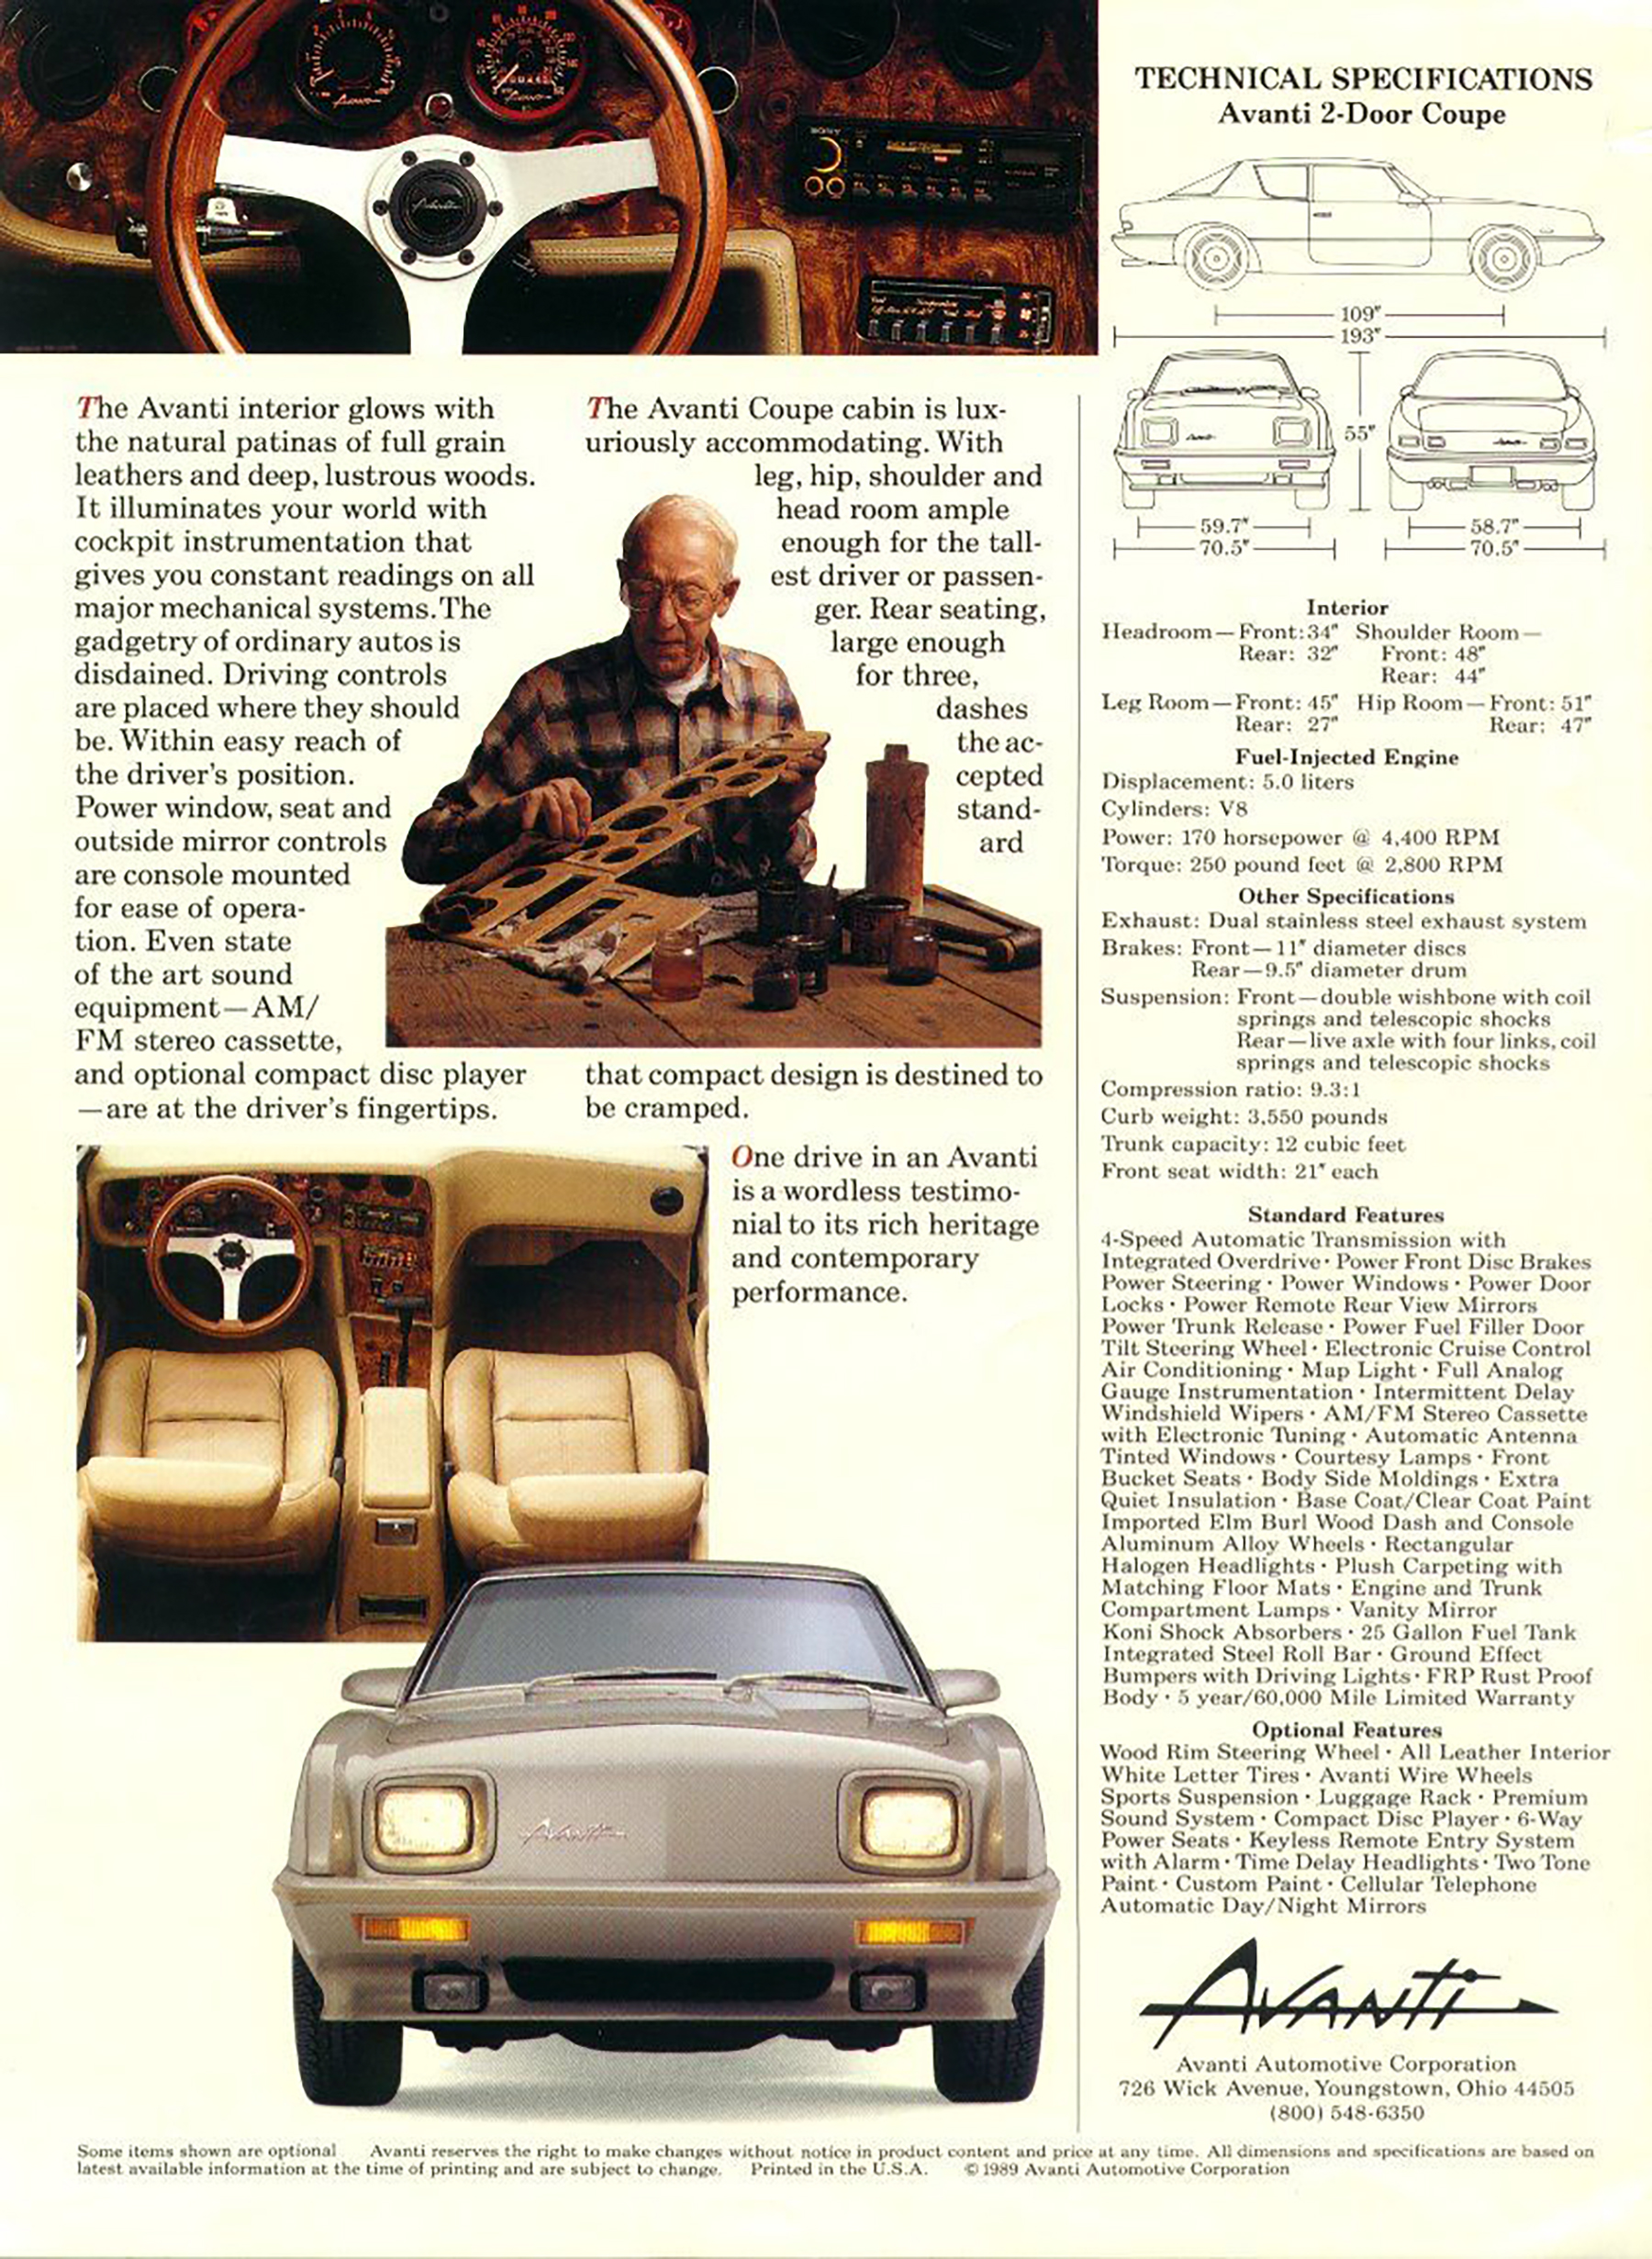 1989 Avanti Ad, Studebaker